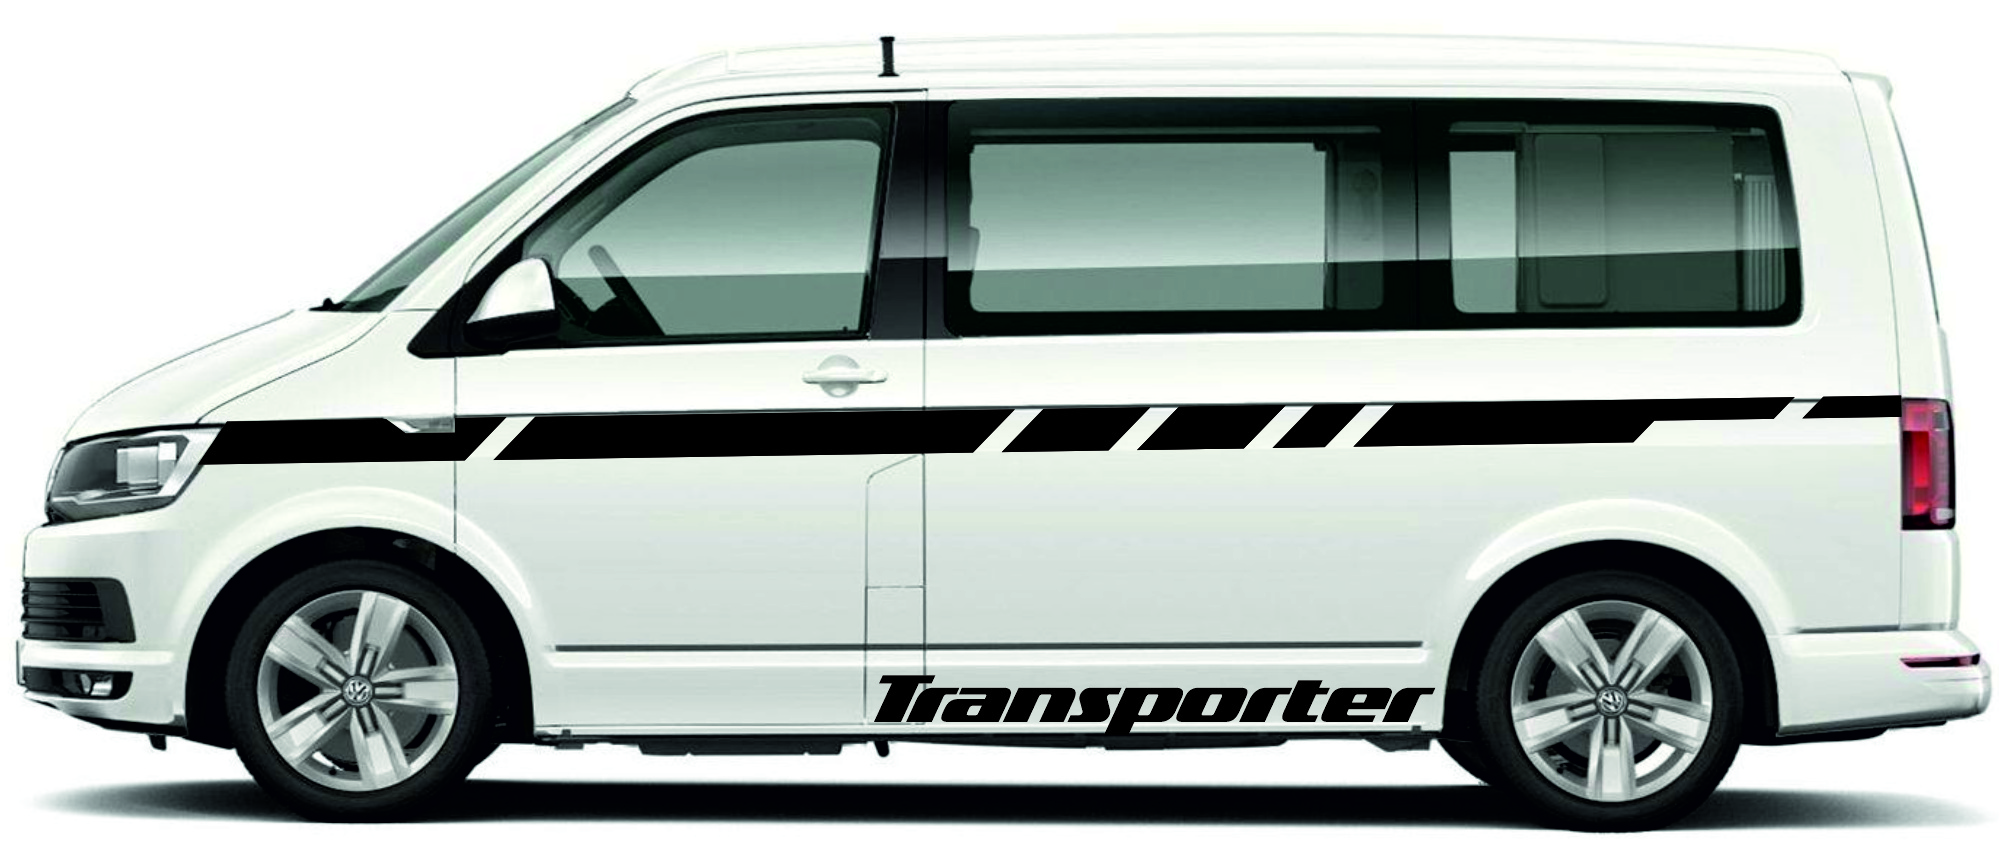 Naklejki VW T5 T6 Transporter pasy na boki krótki naklejki decals stripes sticker aufkleber nalepky samolepky tuning